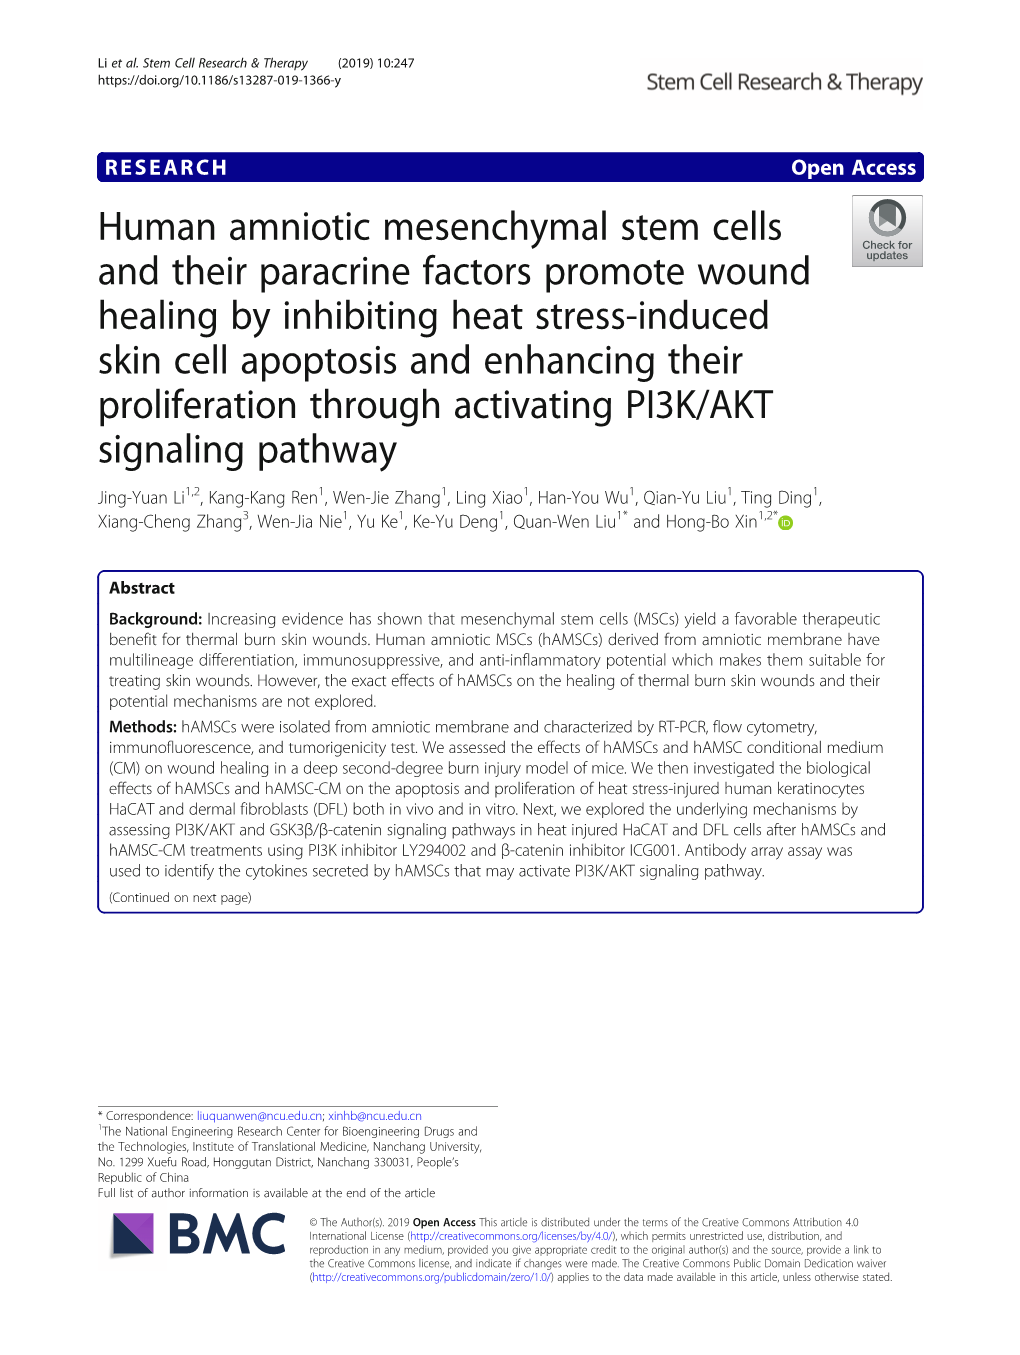 Human Amniotic Mesenchymal Stem Cells and Their Paracrine Factors